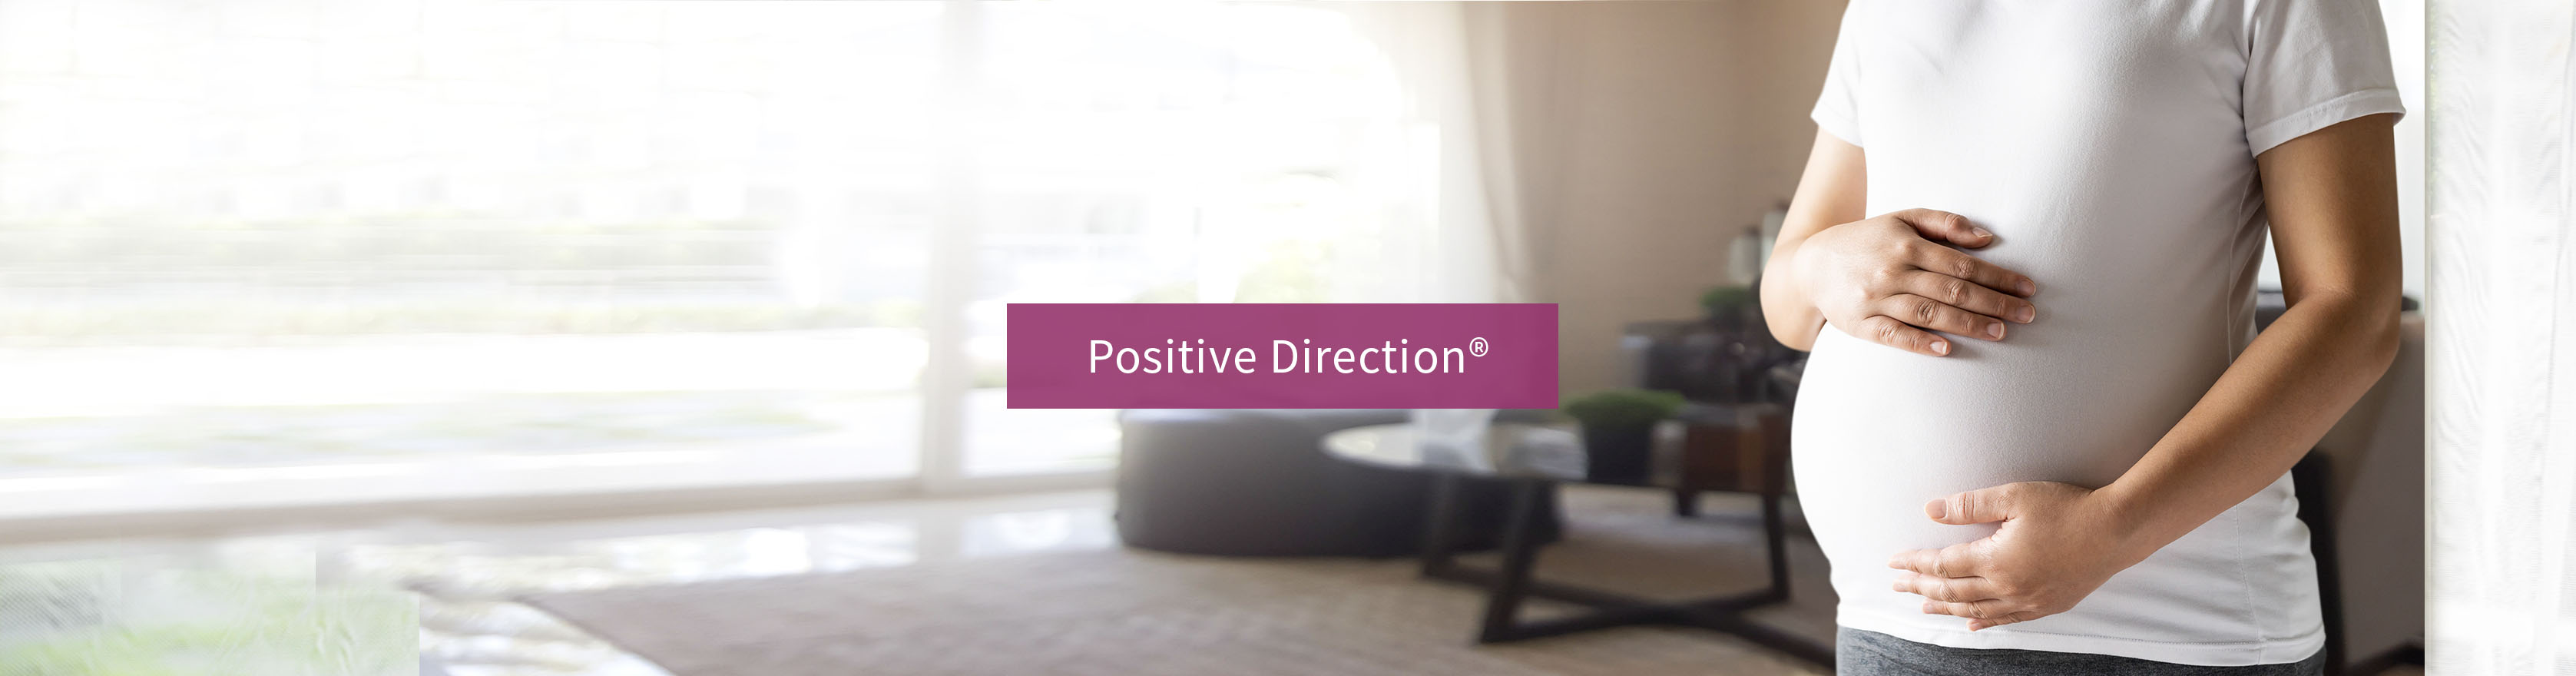 Positive Direction Model - Pregnancy additction